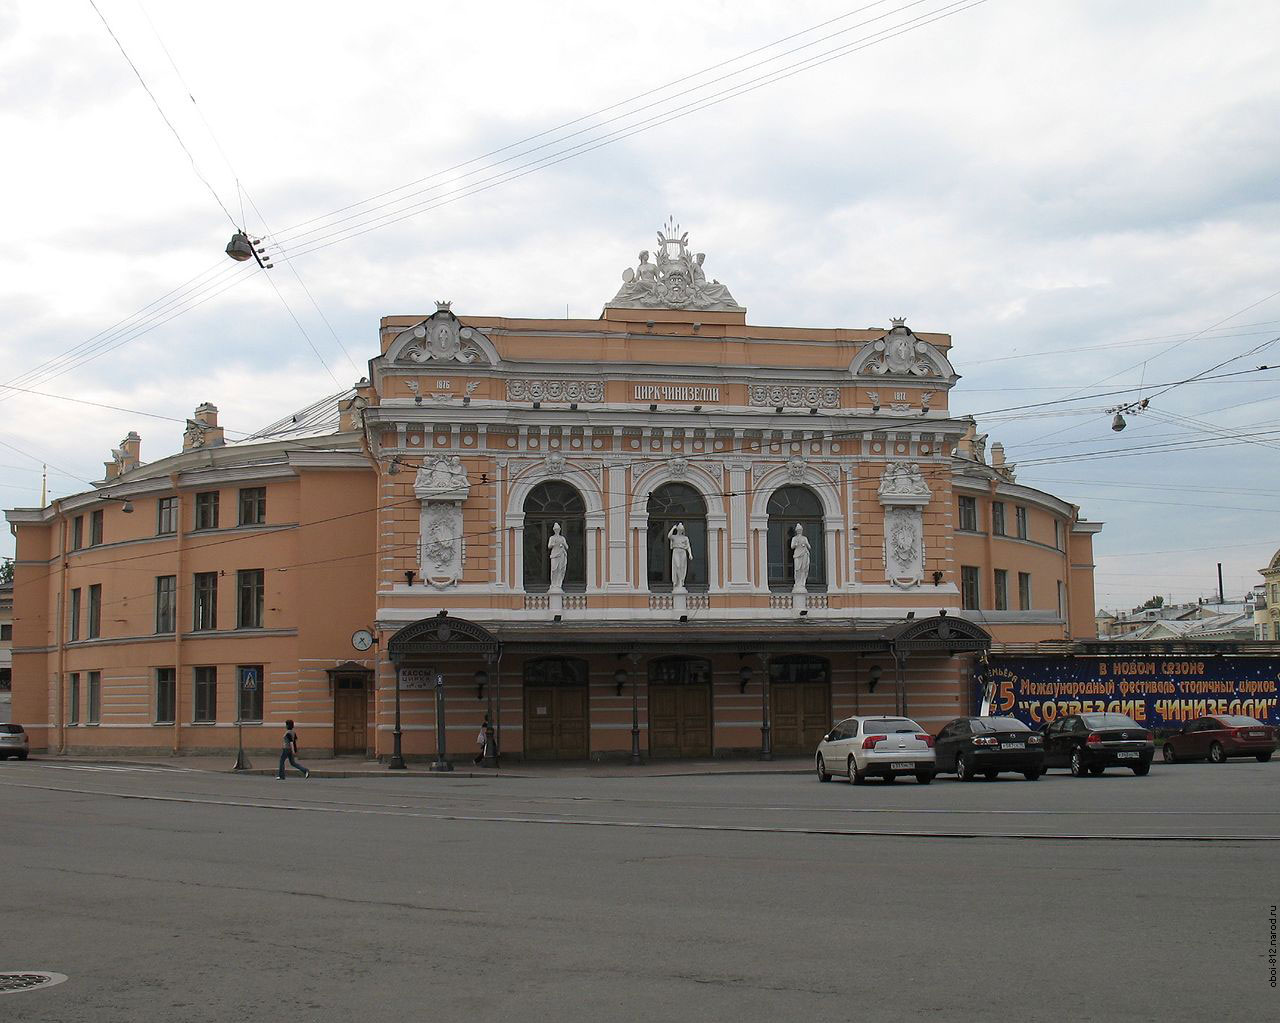 Общий вид Цирка Чинизелли в Петербурге